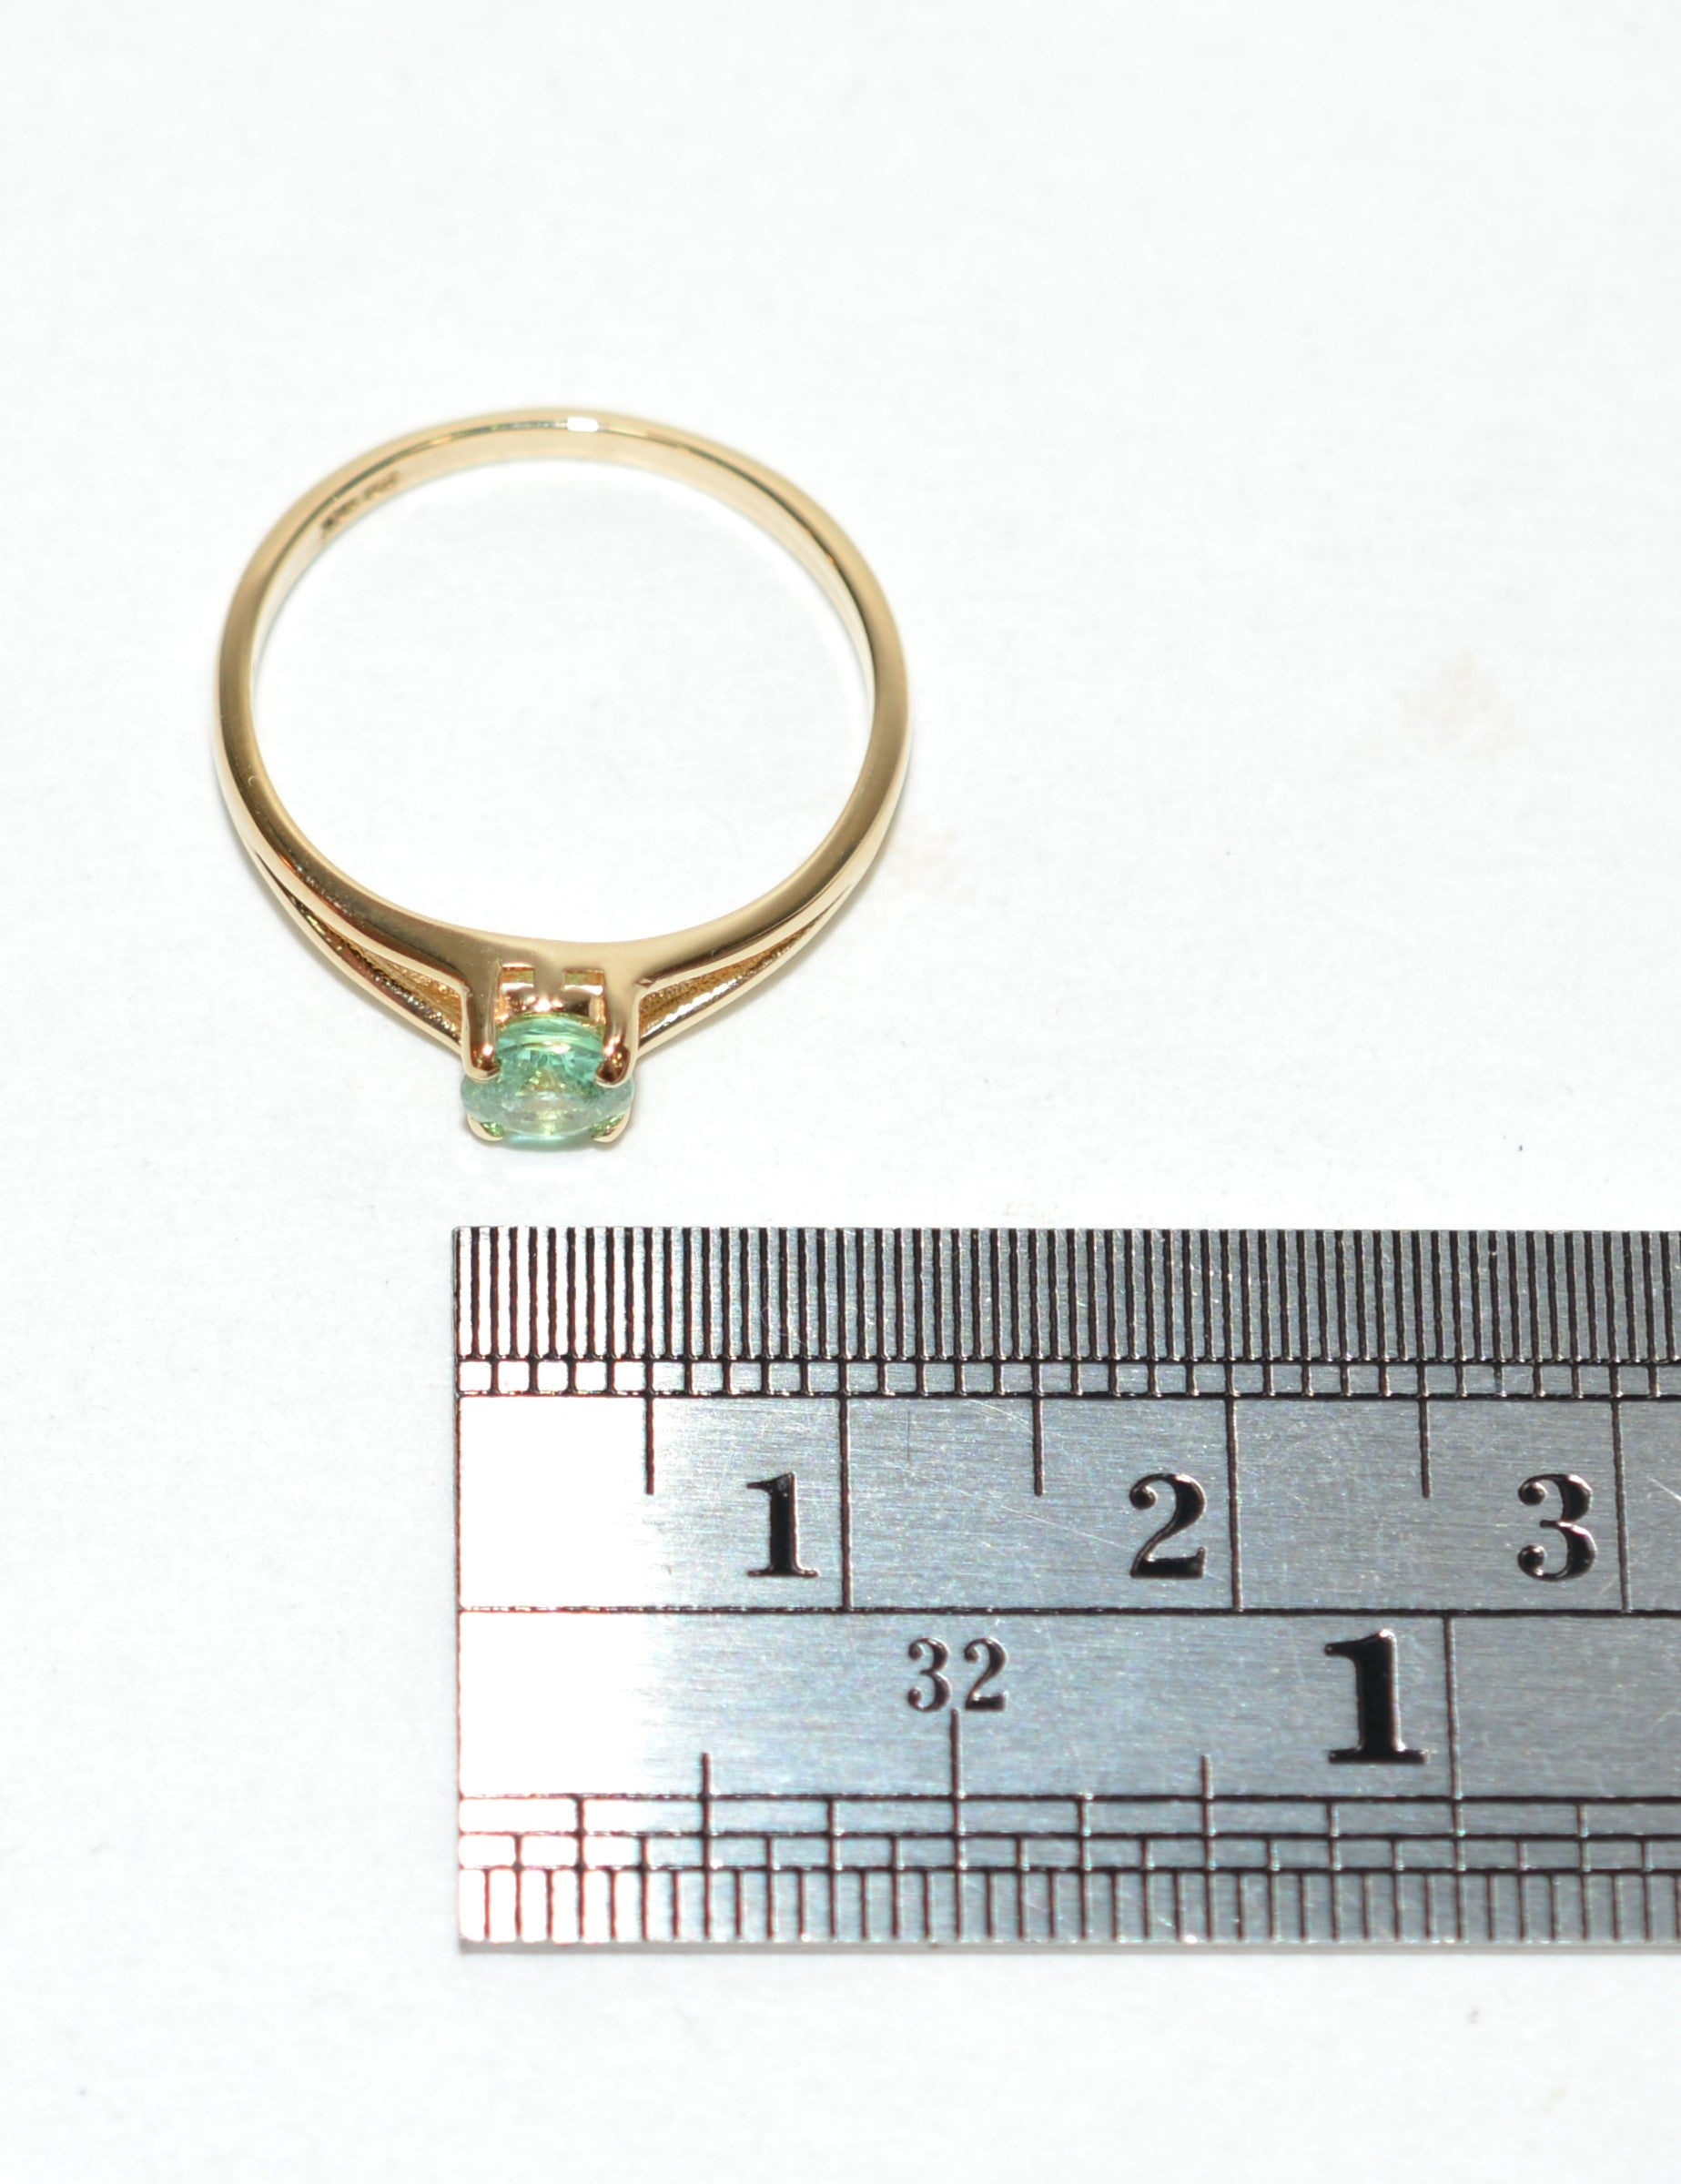 Natural Paraiba Tourmaline Ring 14K Gold .42ct Birthstone Solitaire Cocktail Ring Aqua Gemstone Engagement Ring Vintage Estate Jewellery